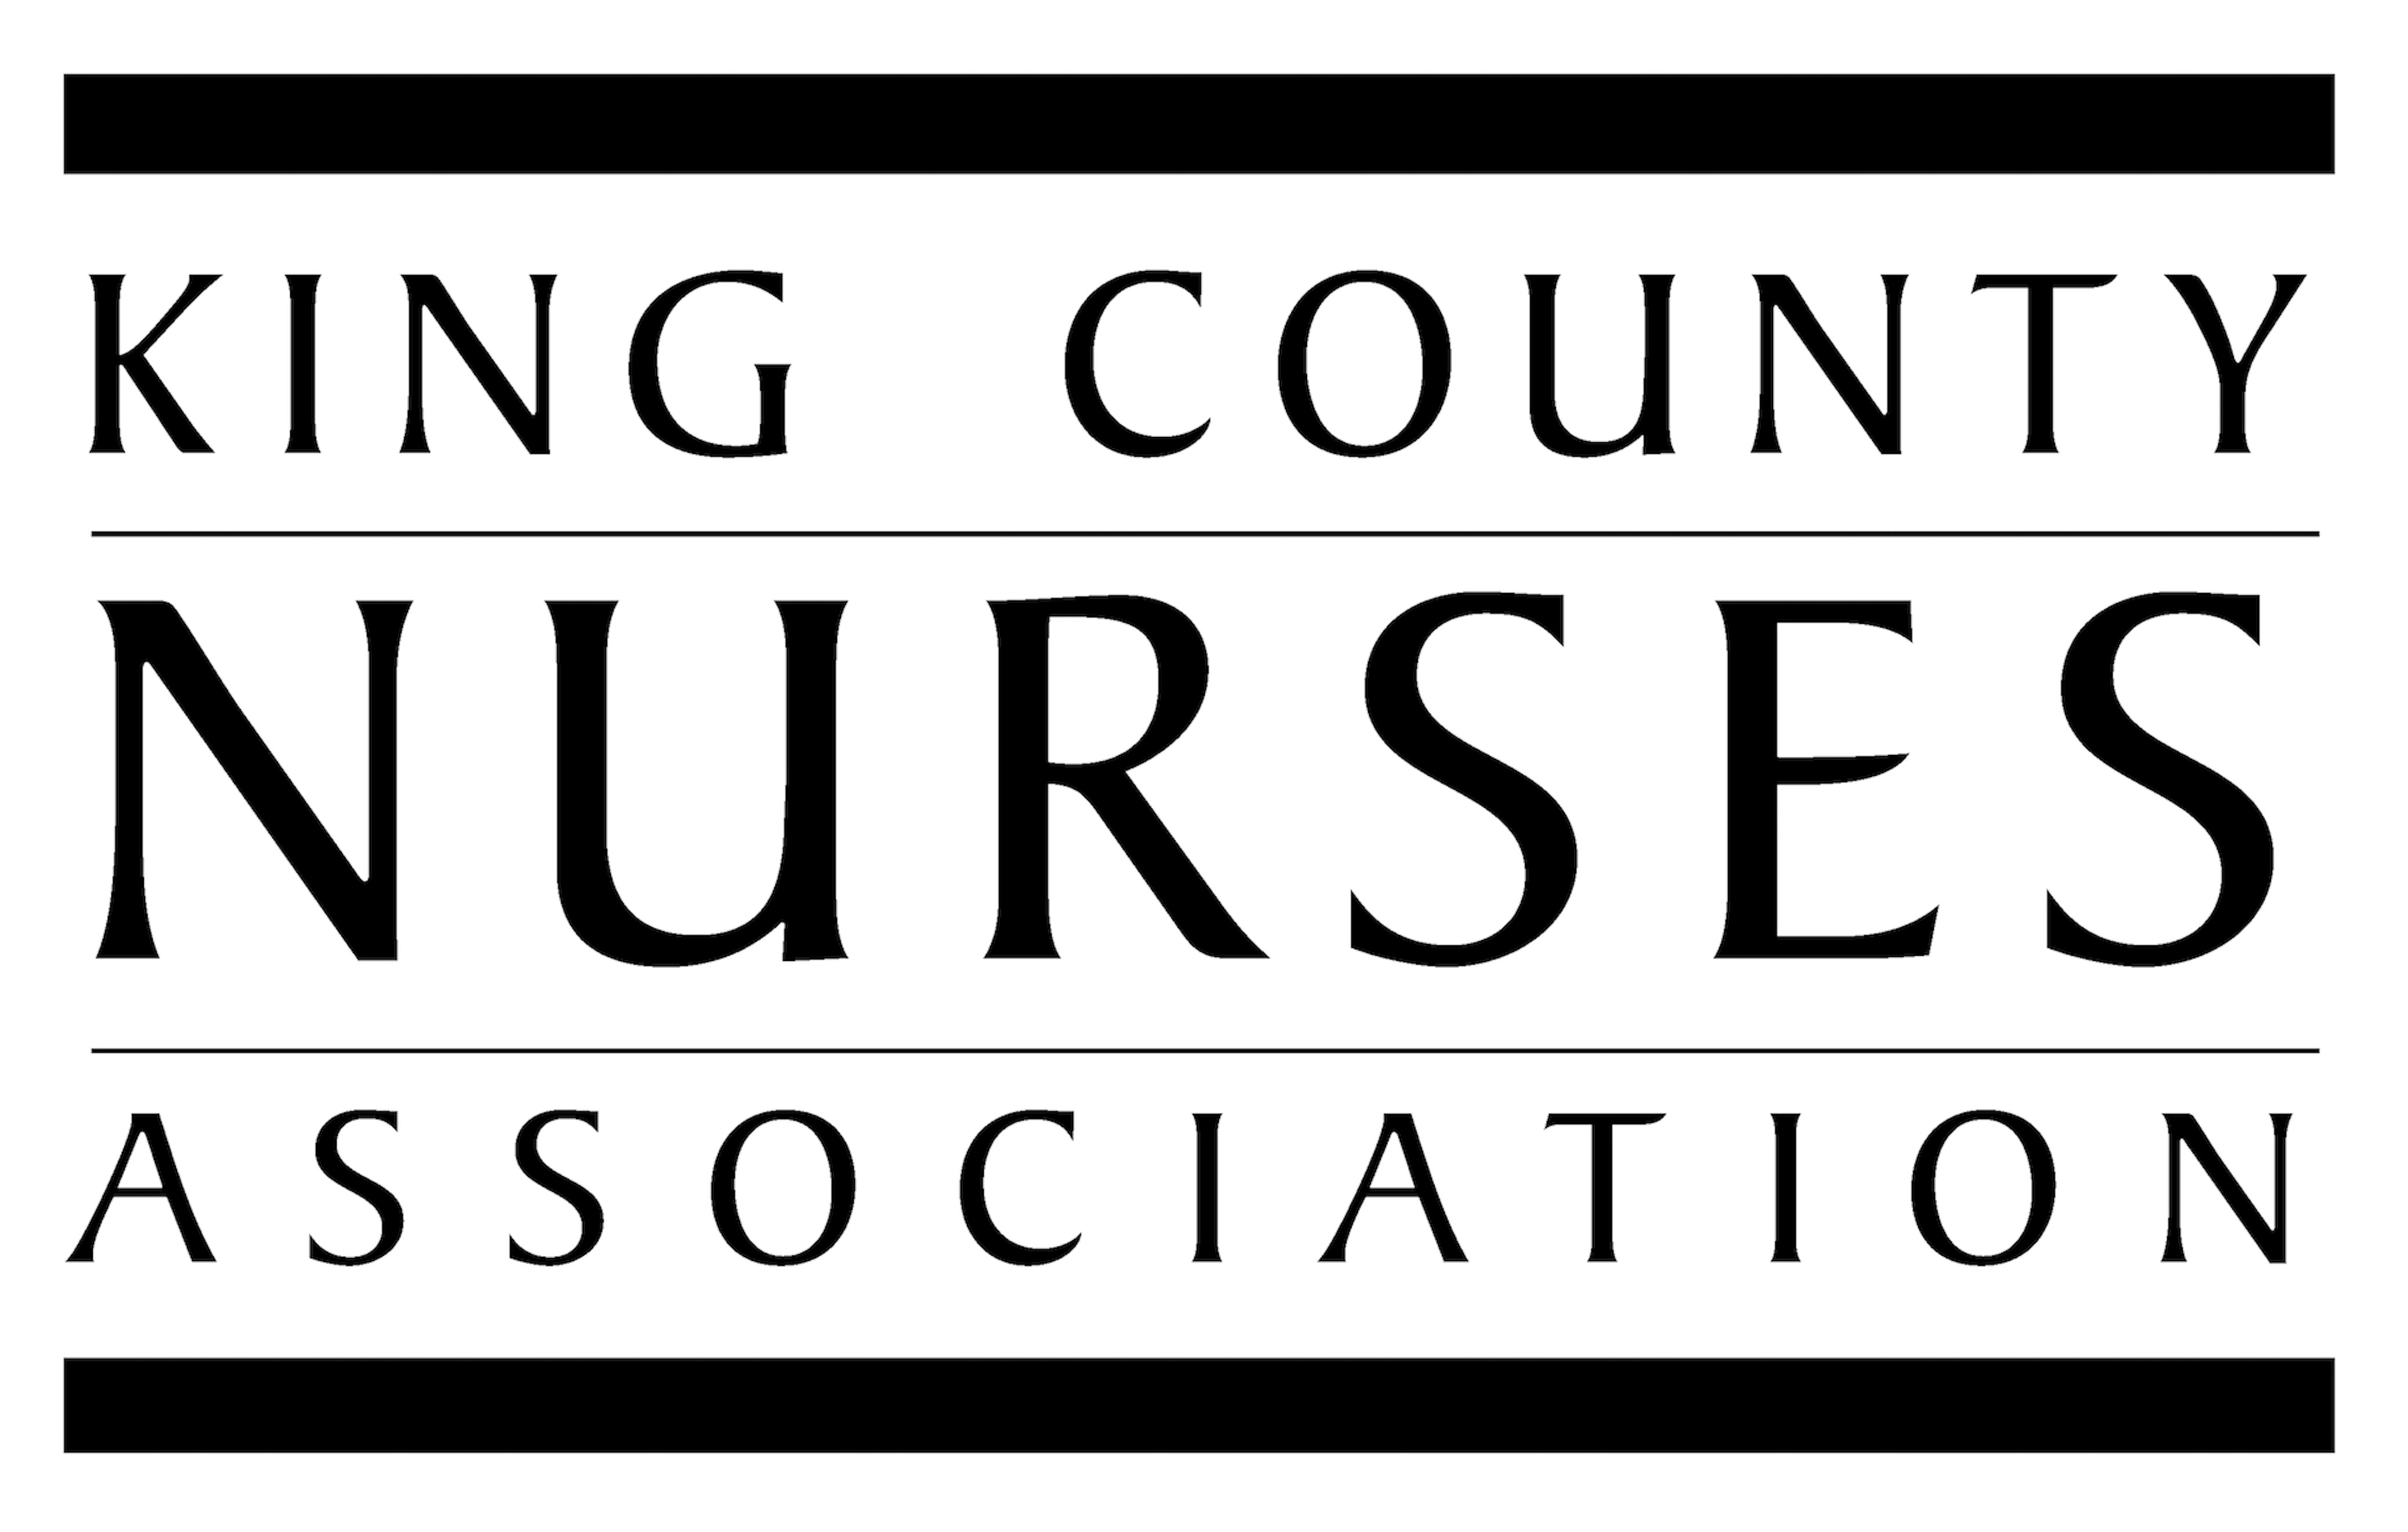 King County Nurses Association logo